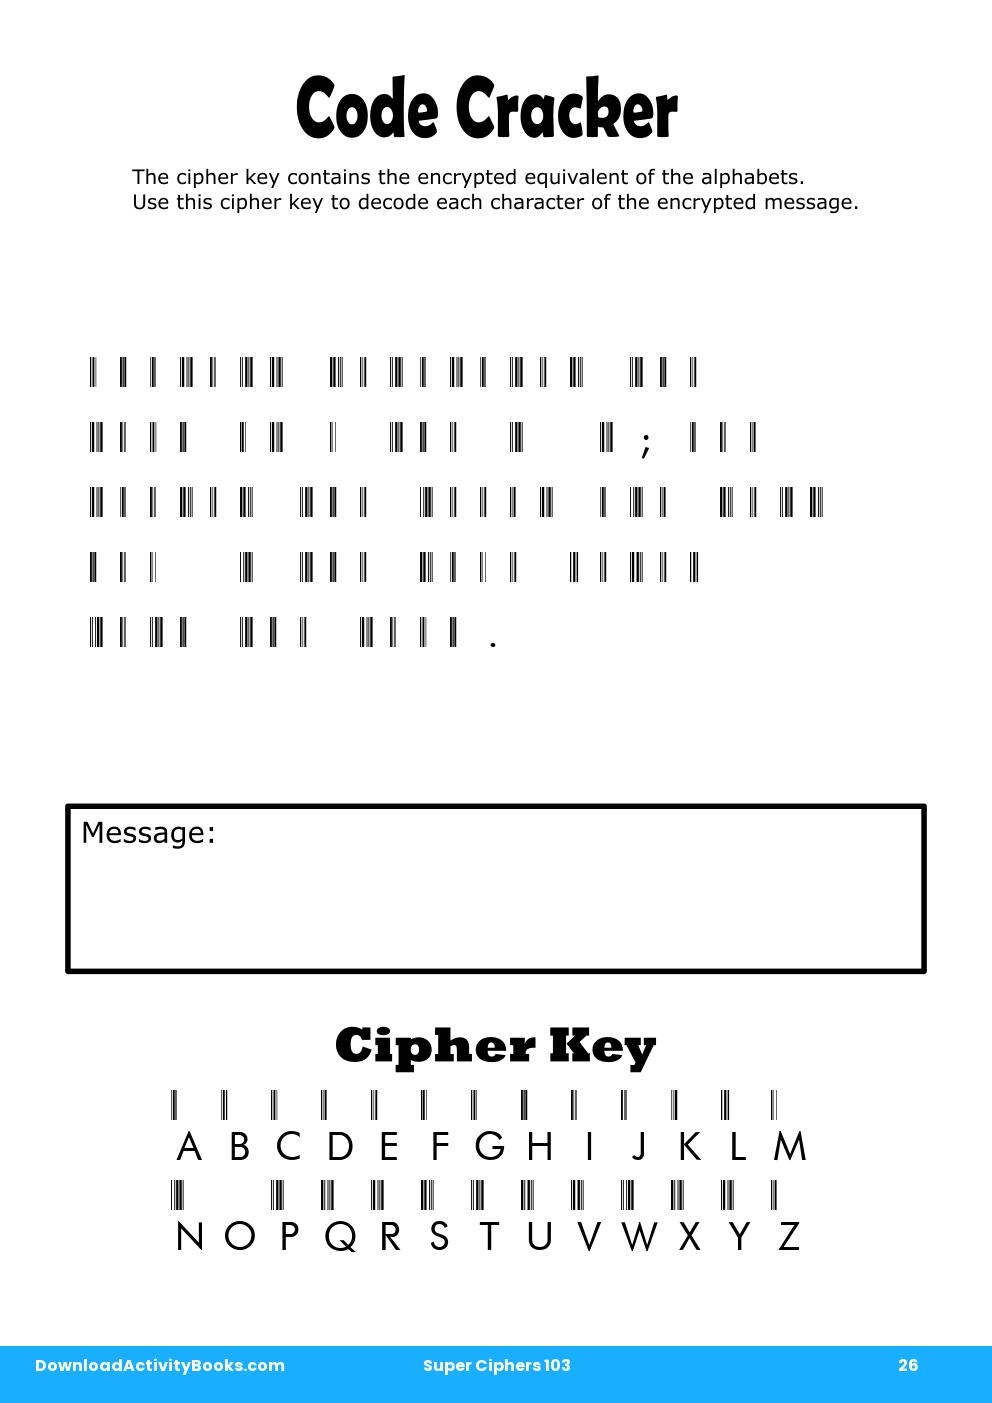 Code Cracker in Super Ciphers 103